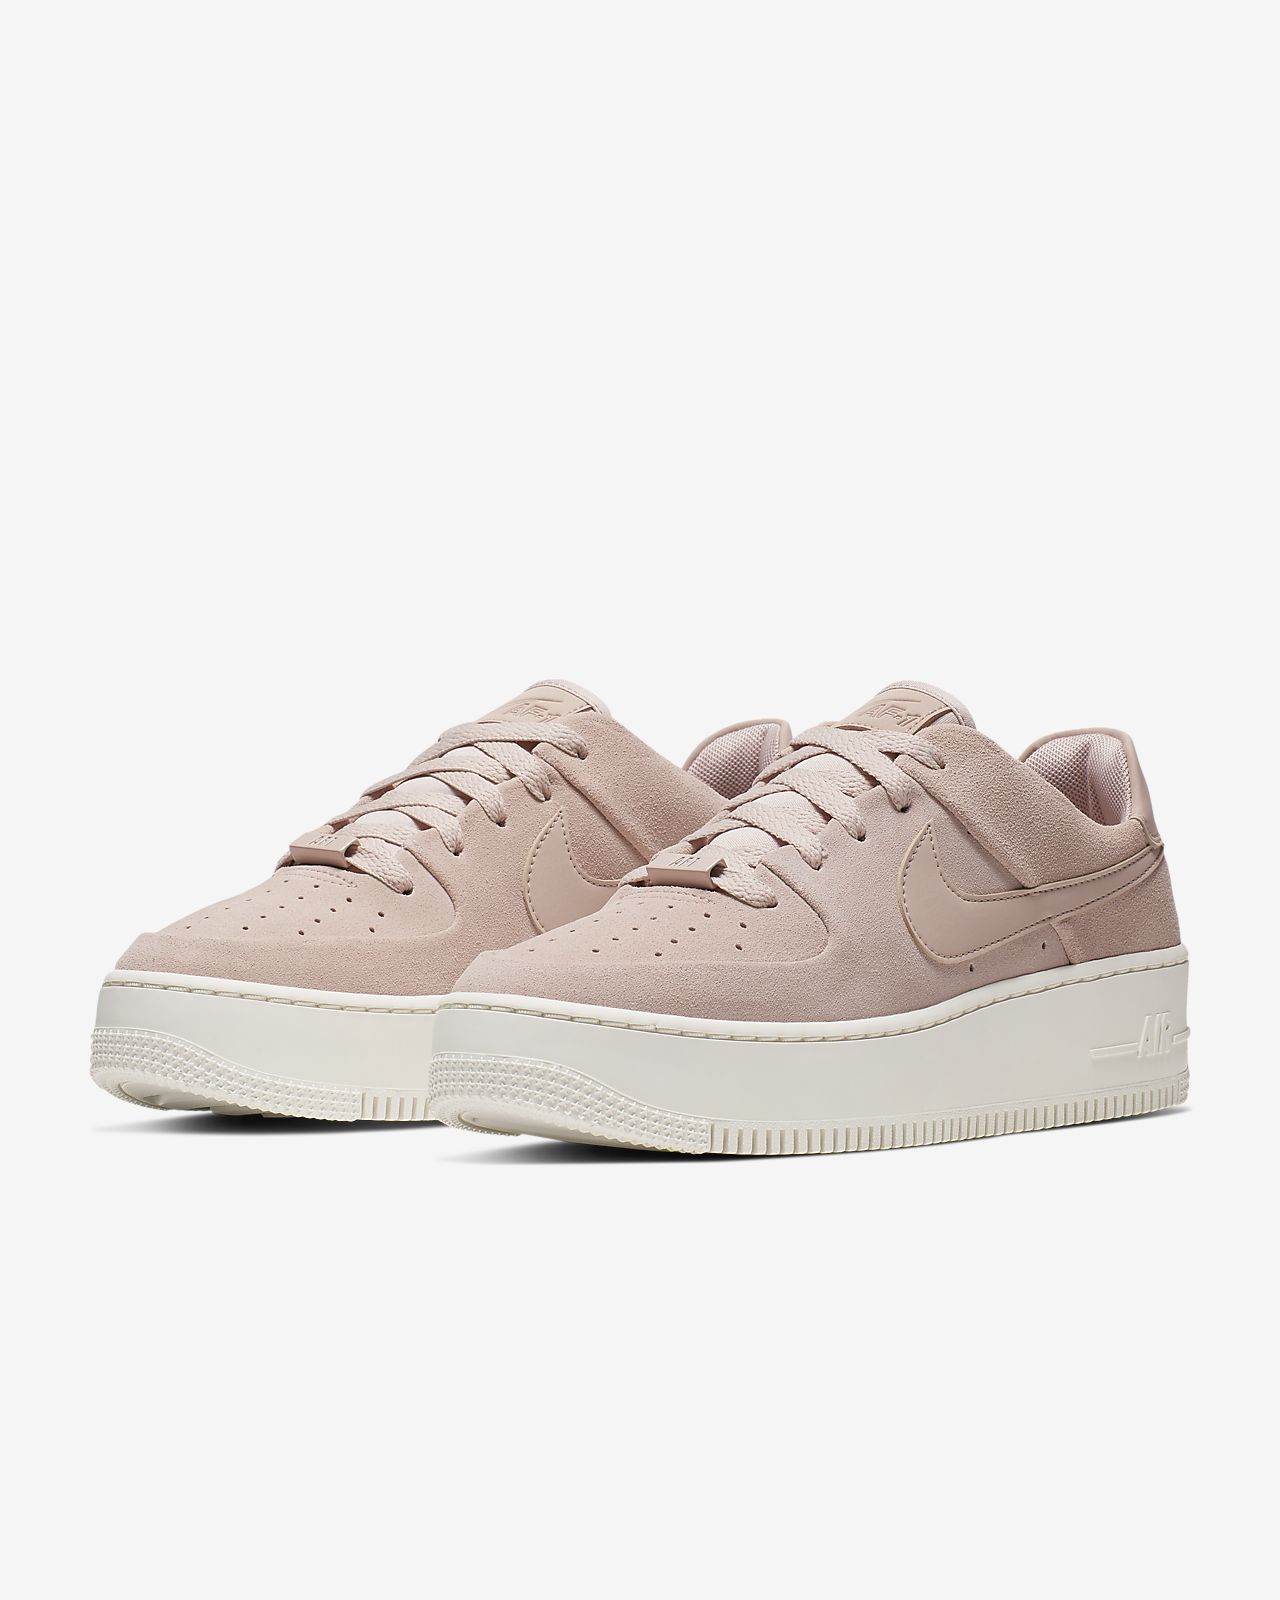 nike women's air force 1 sage low pink sneaker